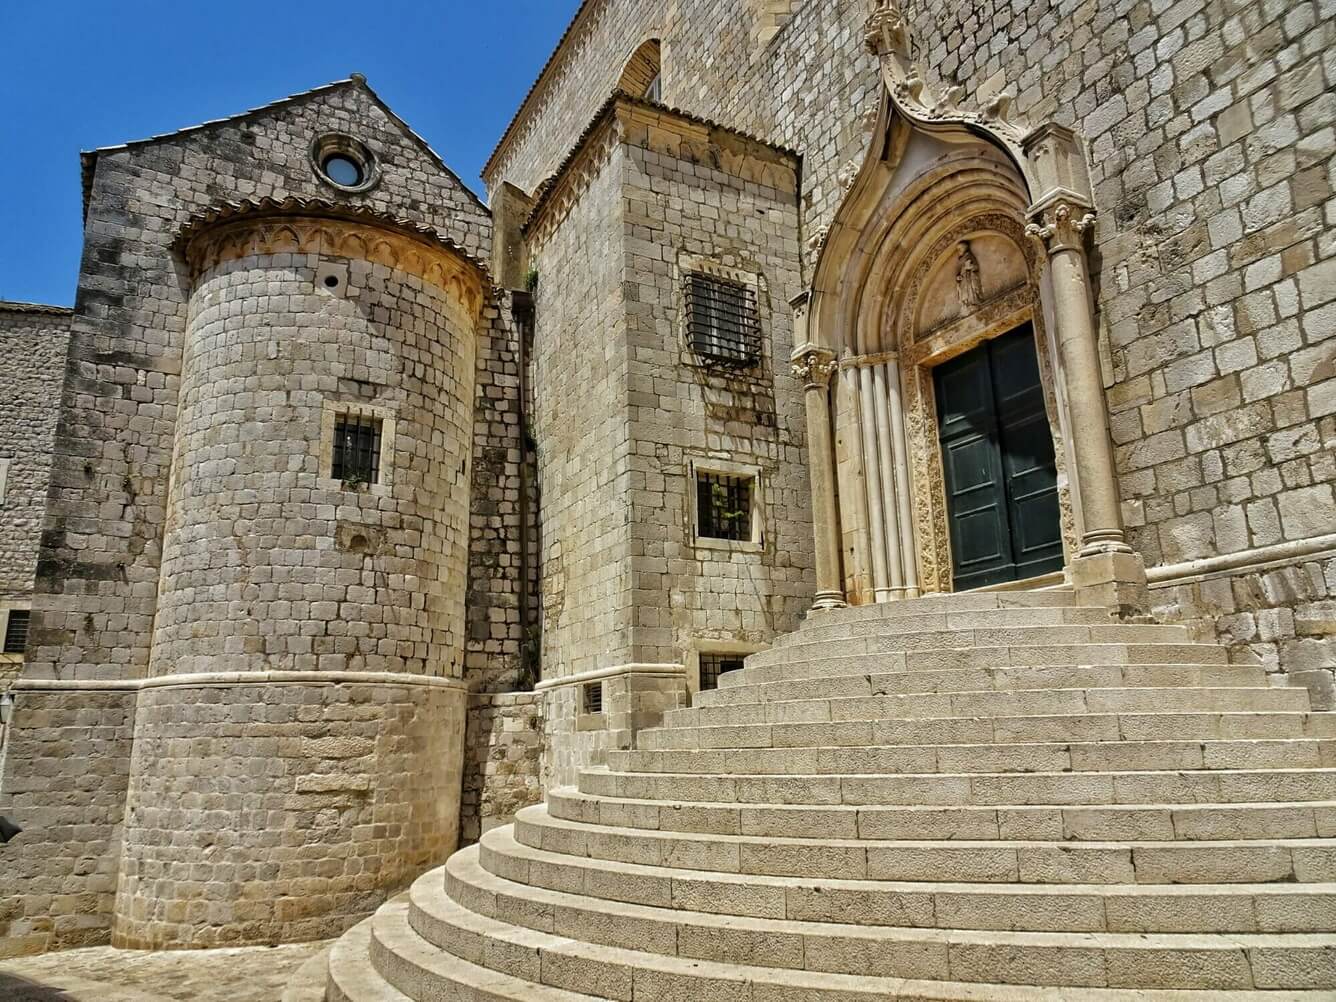 Dubrovnik, King's Landing của phim Game of Thrones